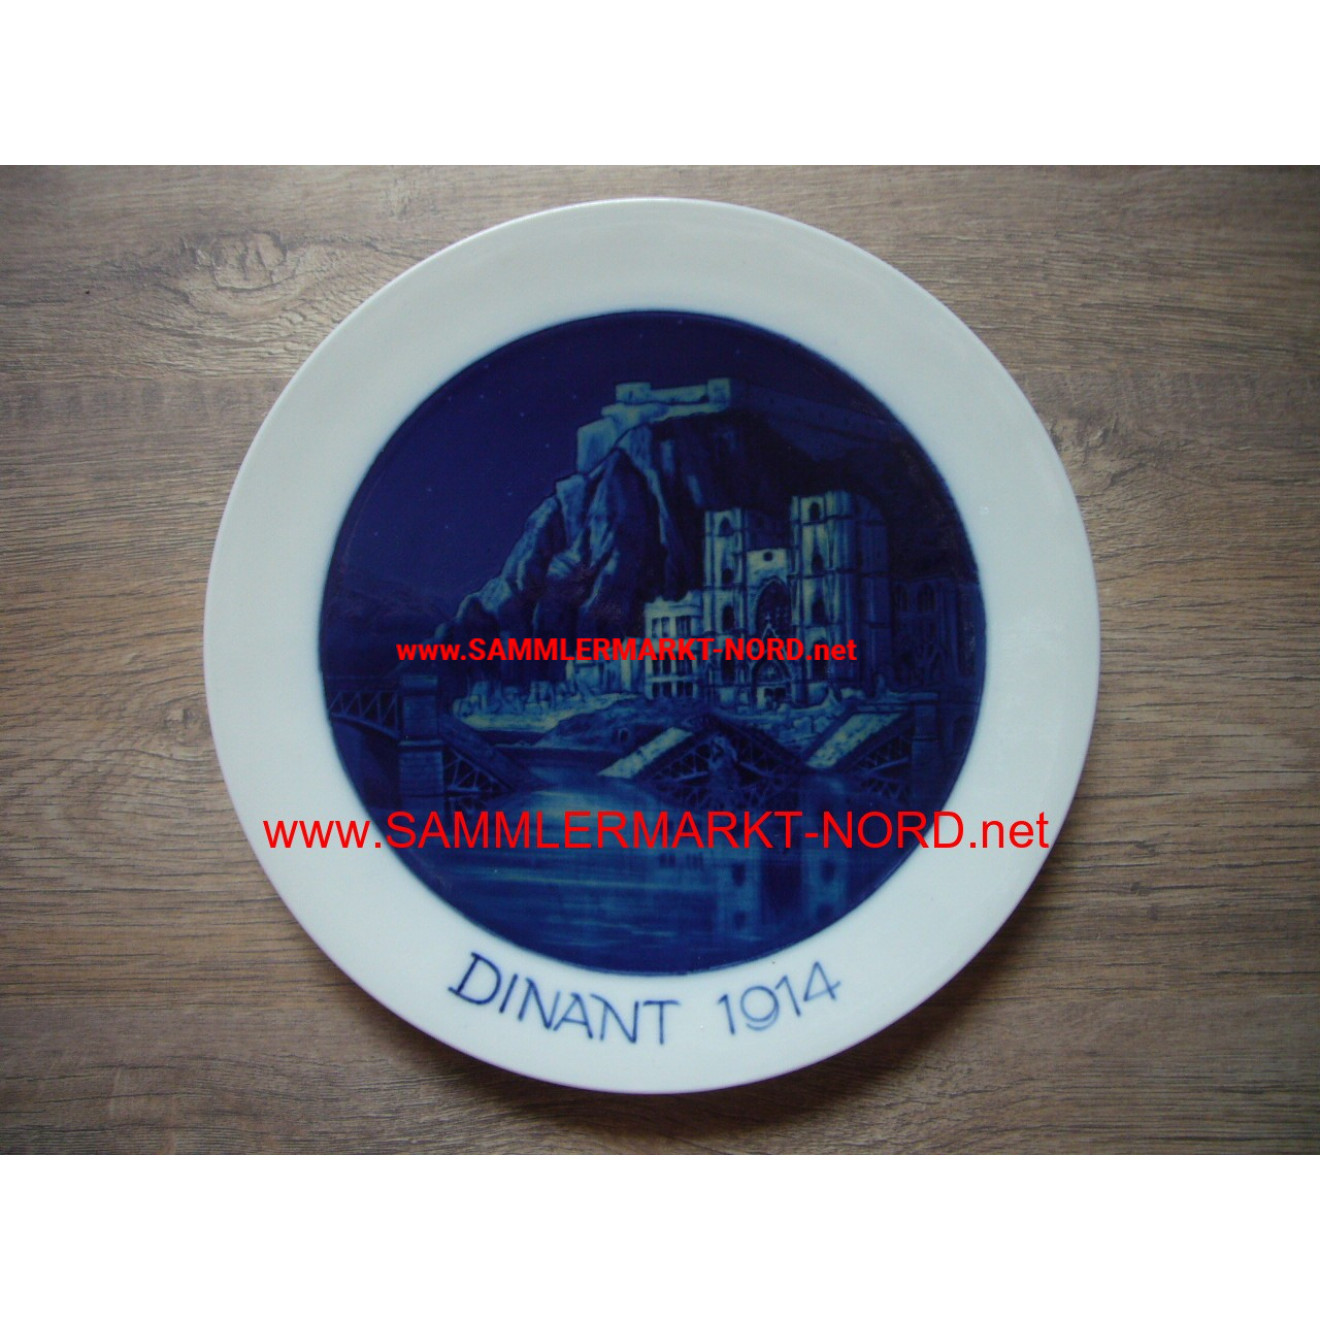 Meissen wall plate - Dinant (Belgium) 1914